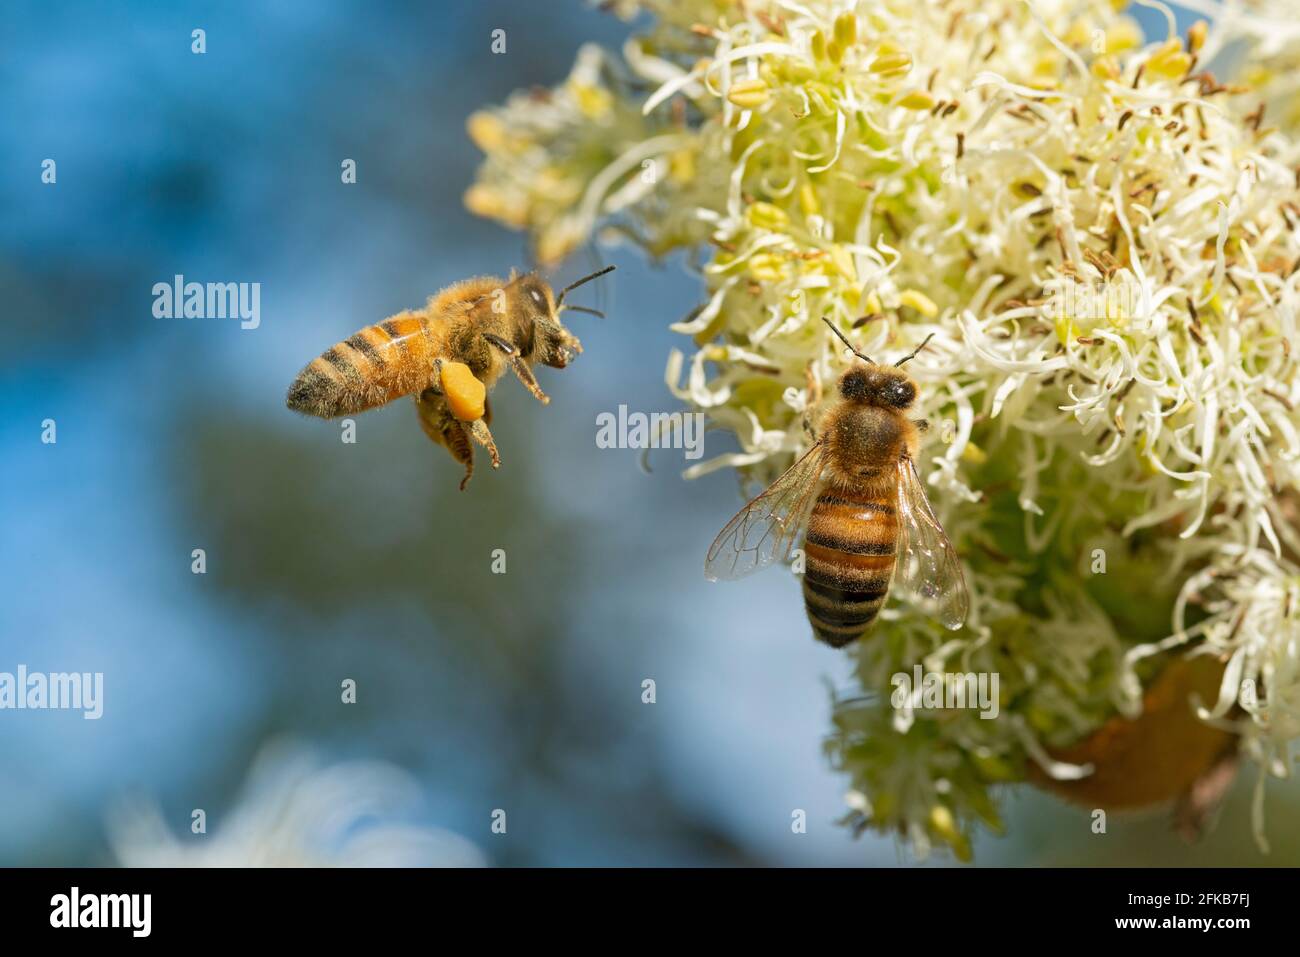 Italy, Lombardy, Crema, Bee Gathering Pollen on Manna Ash Tree Stock Photo  - Alamy